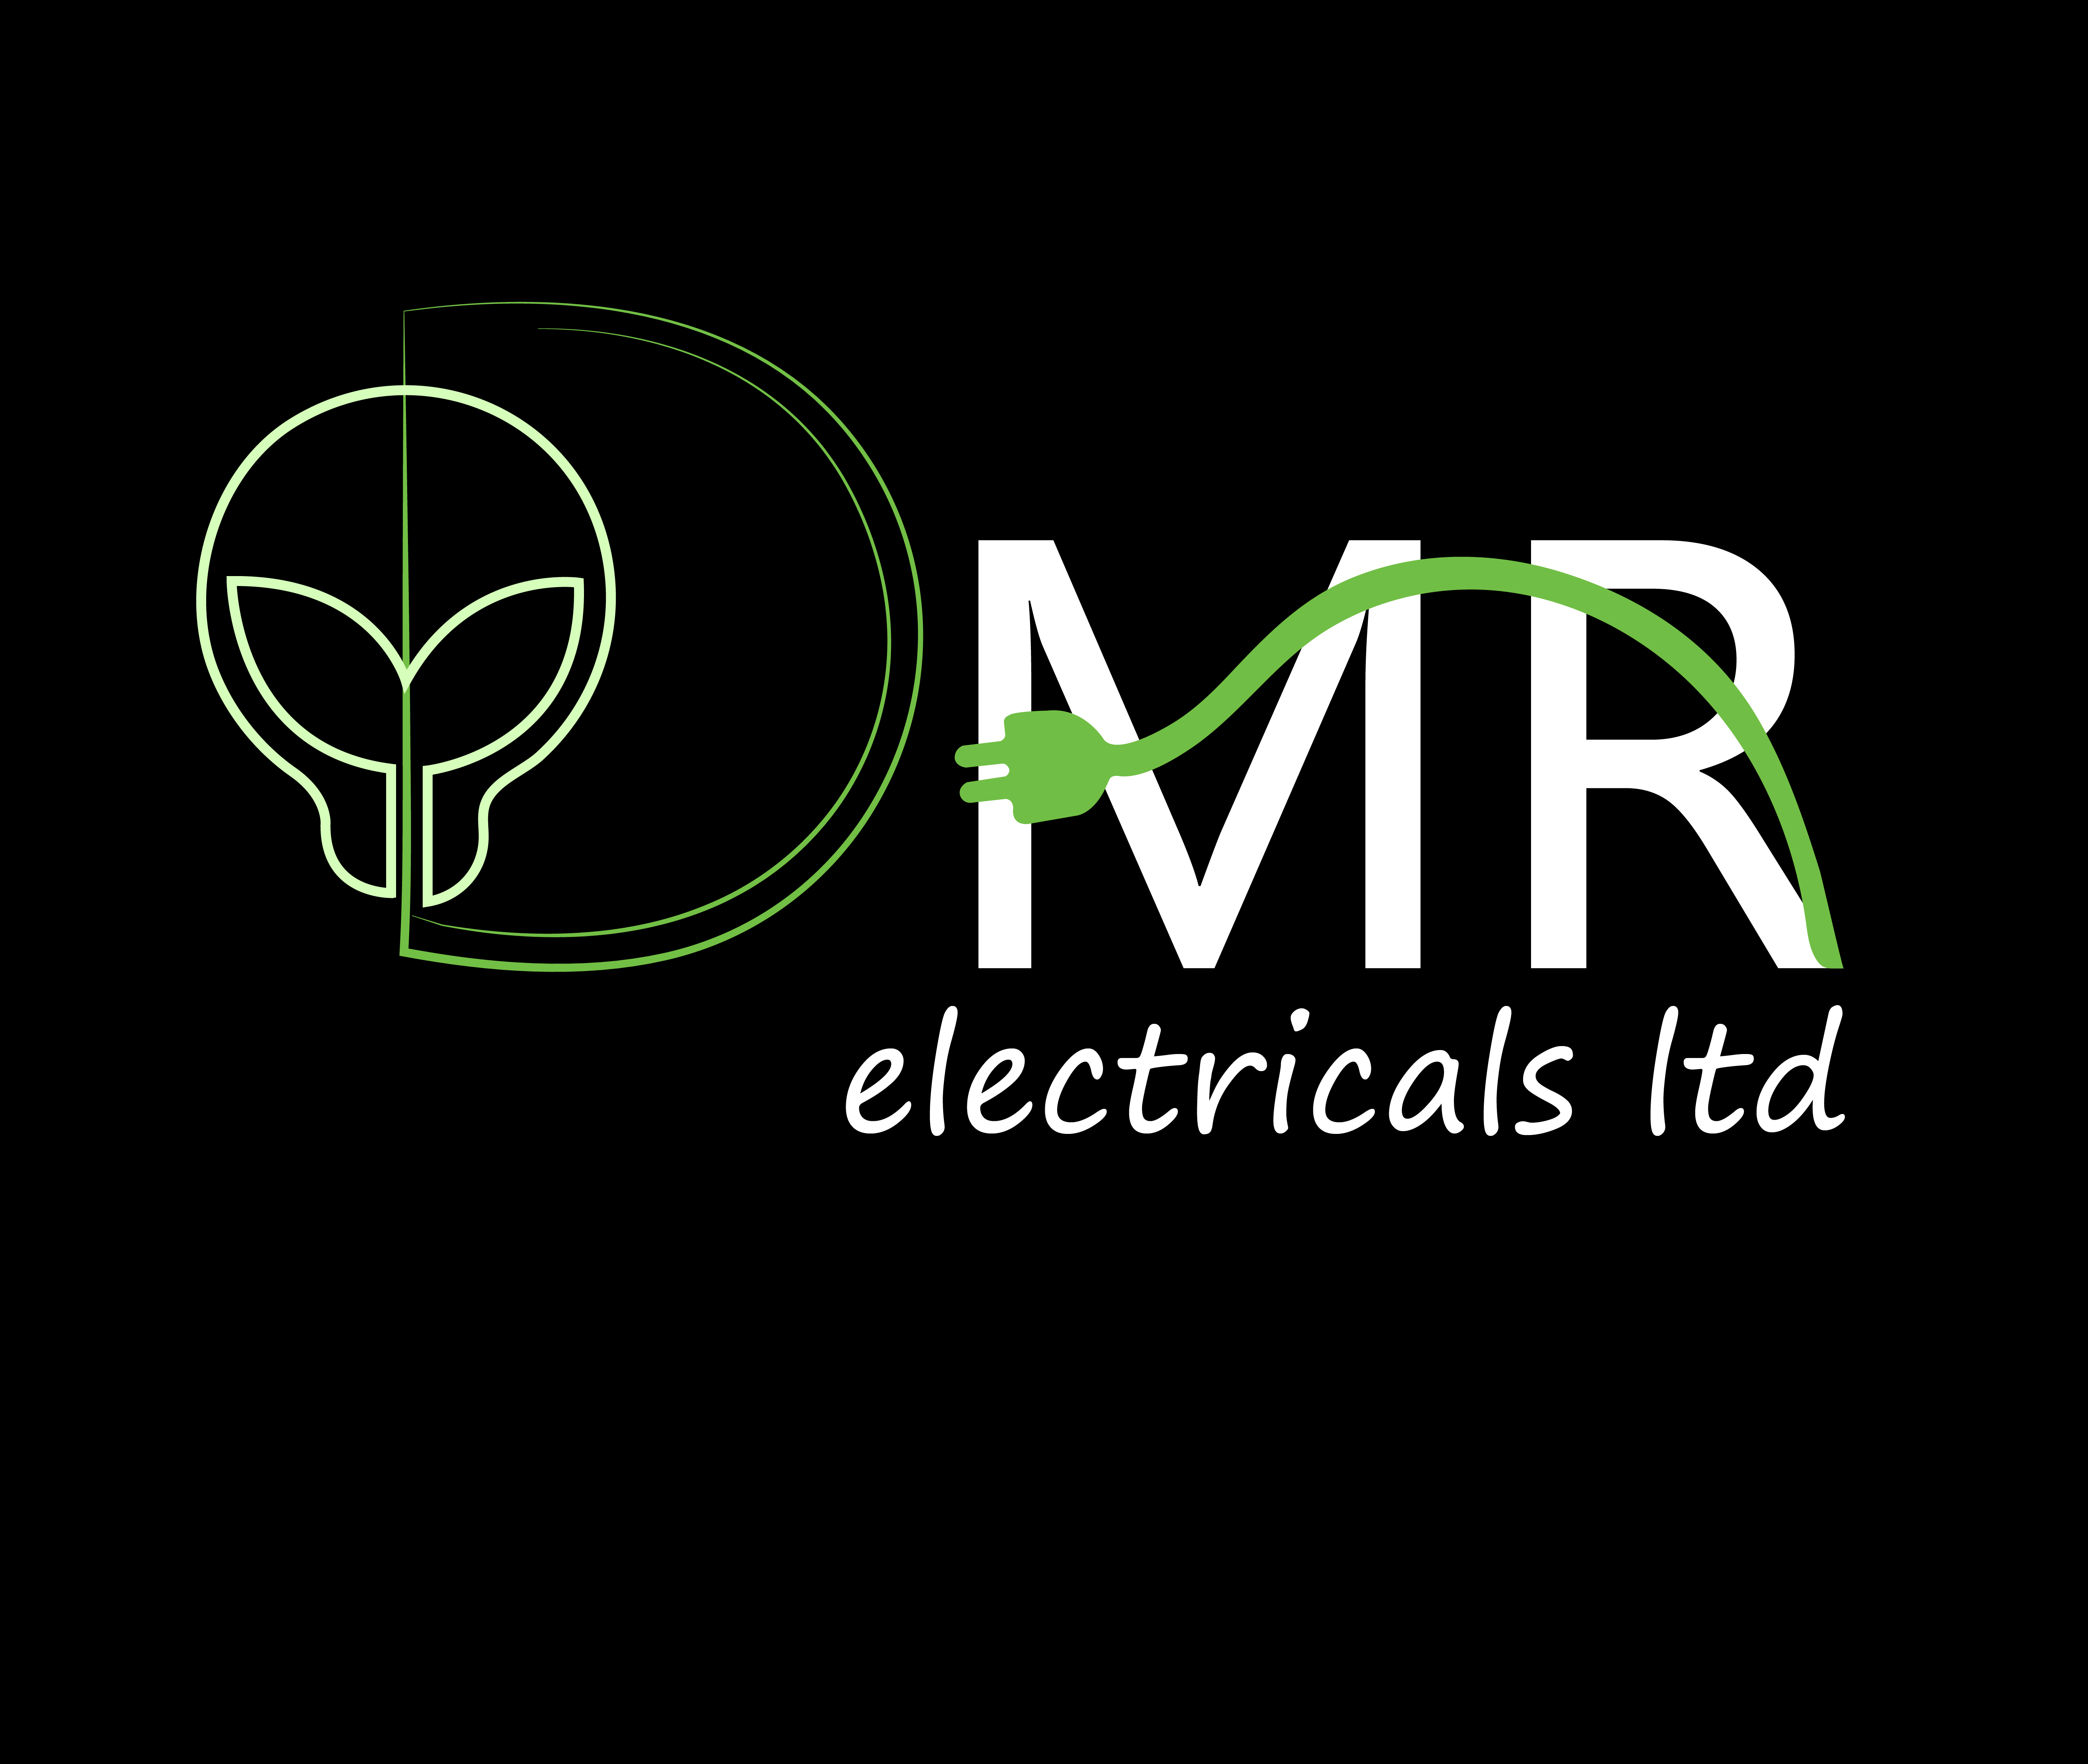 DMR Electricals Ltd